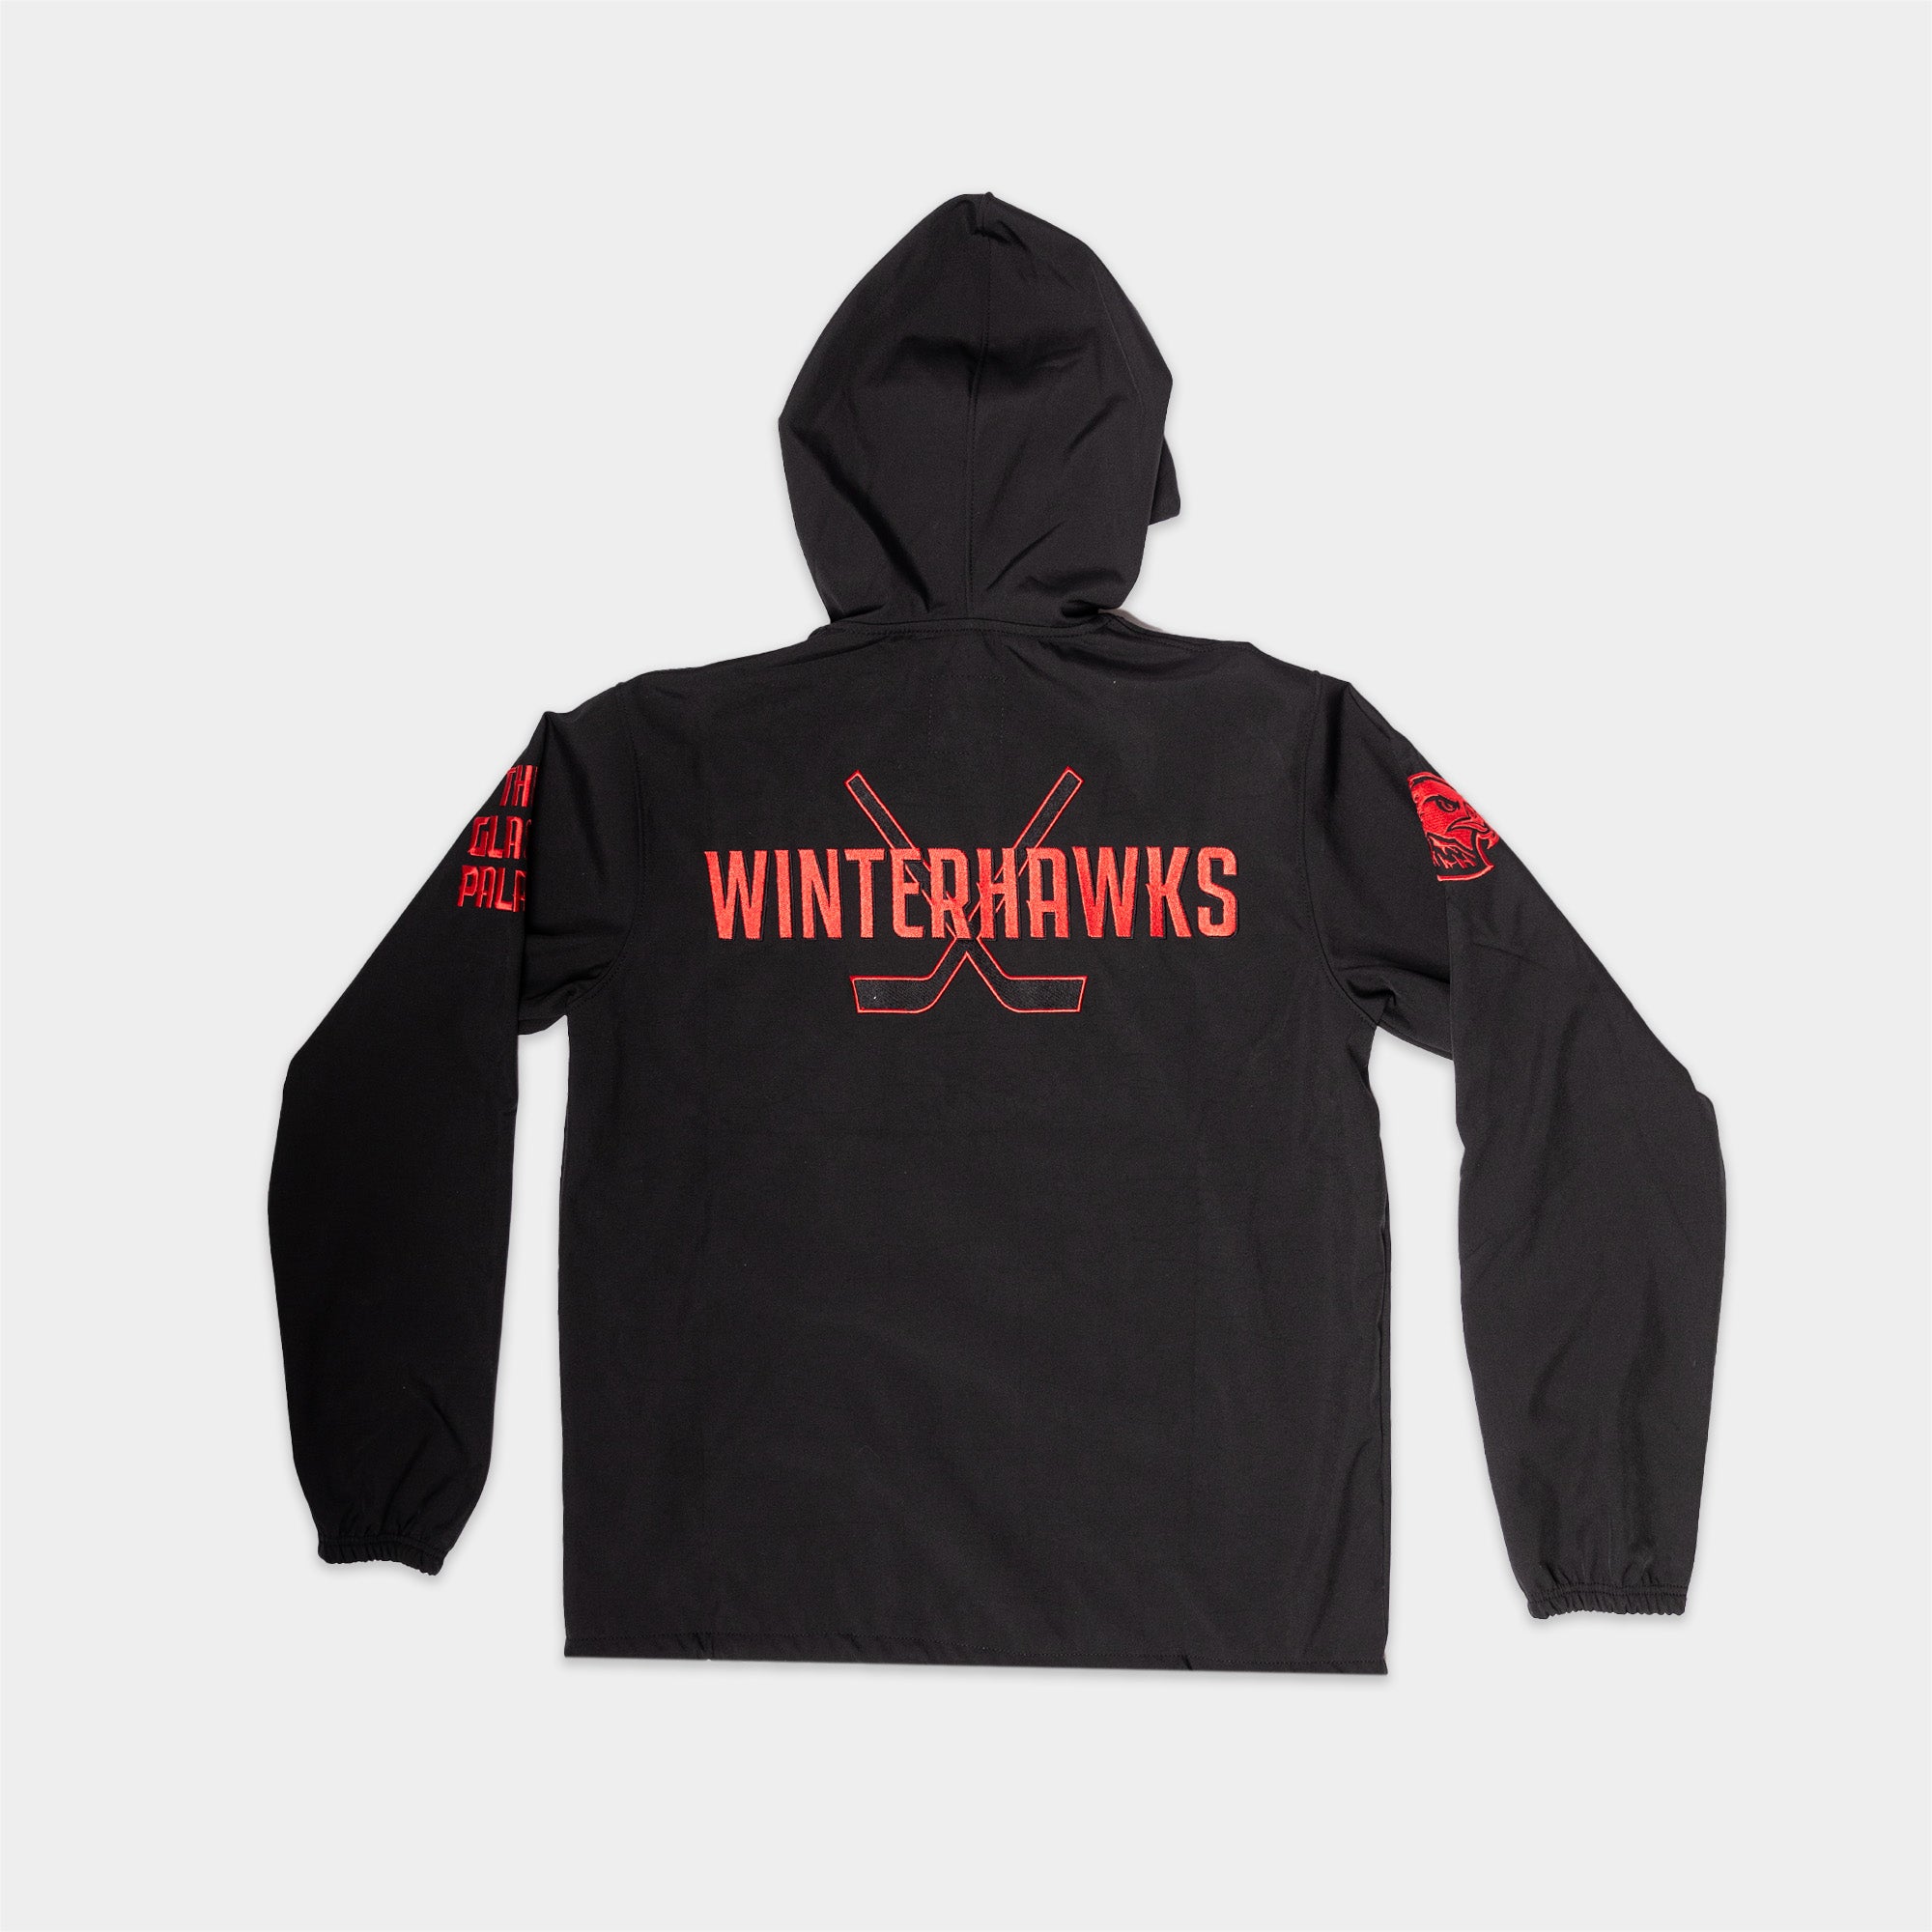 Winterhawks Coaches Jacket